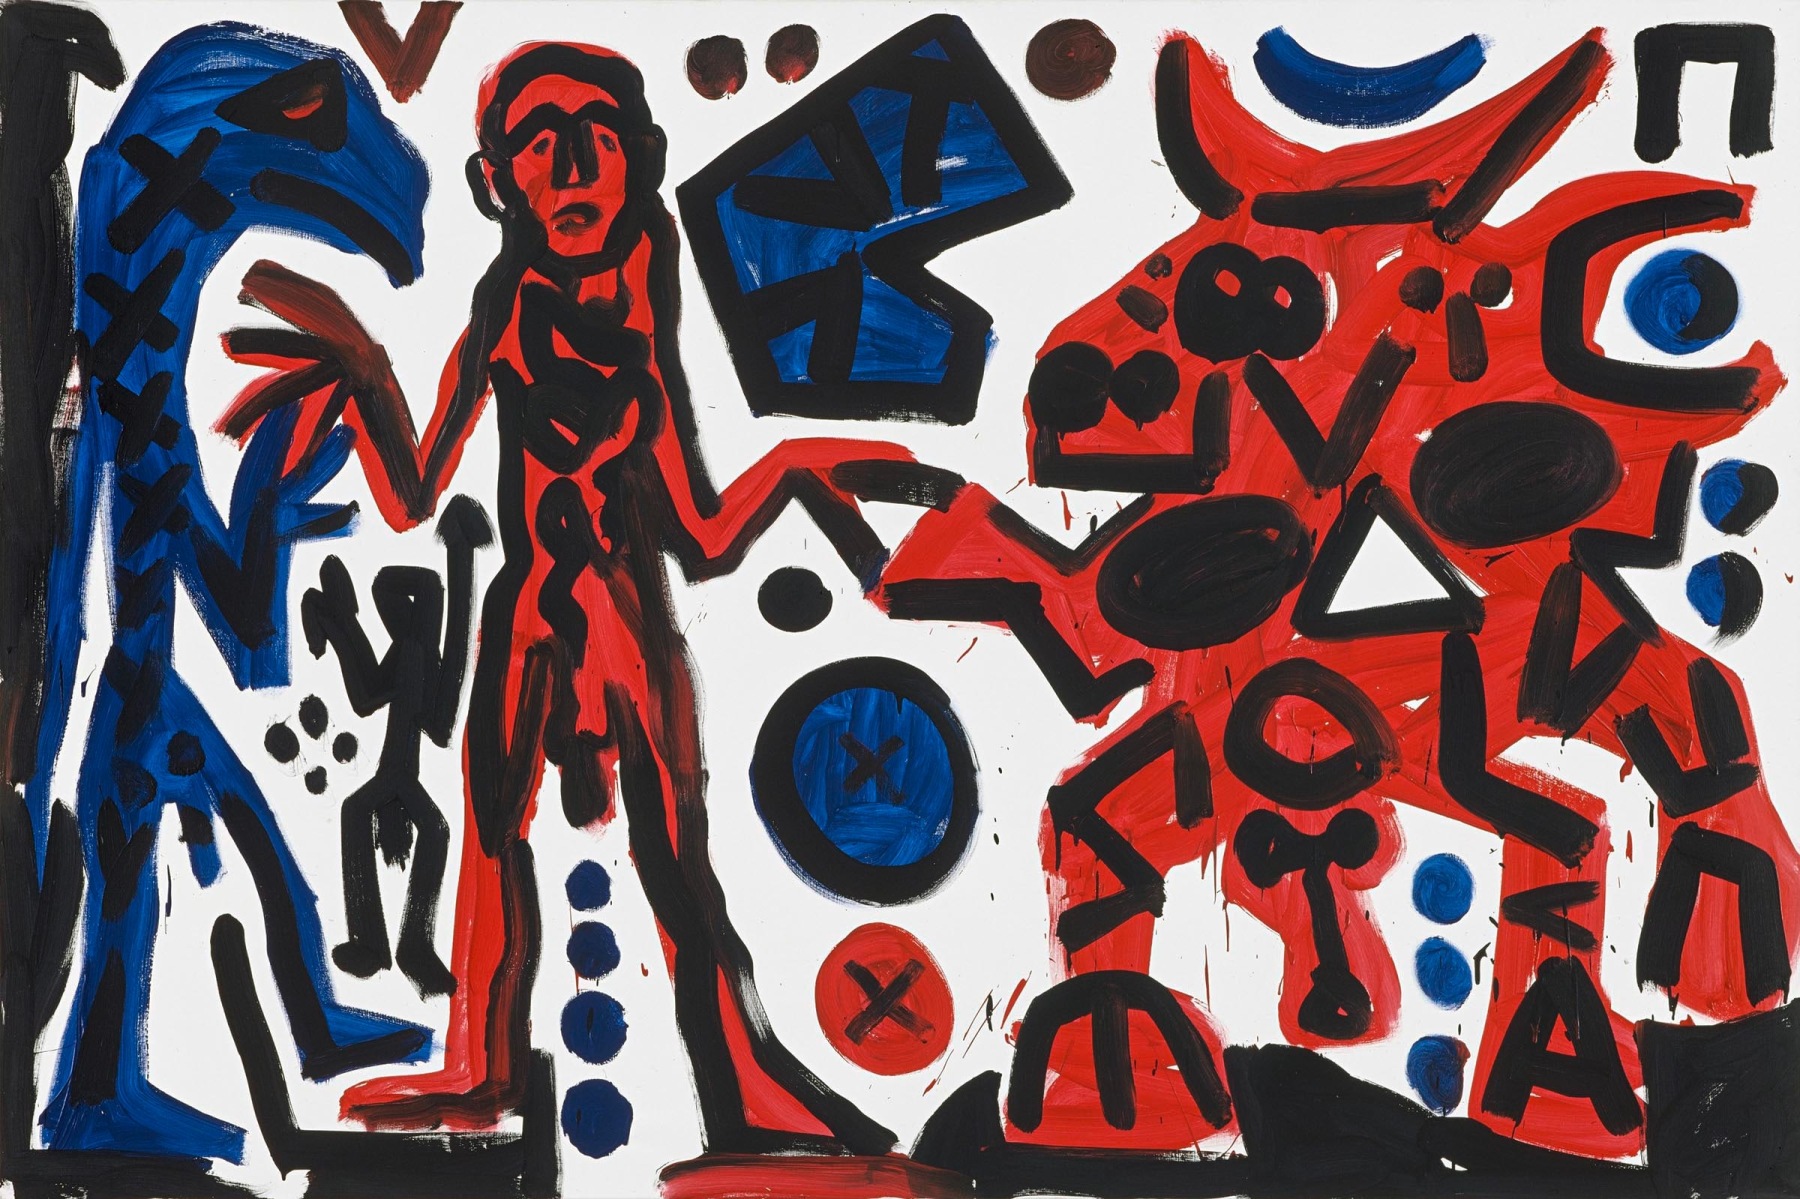 A.R. Penck

&amp;ldquo;Mann, Adler, Stier (Man, Eagle, Bull)&amp;rdquo;, 1995

Acrylic on canvas

78 3/4 x 118 inches

200 x 300 cm

RP 877

$725,000